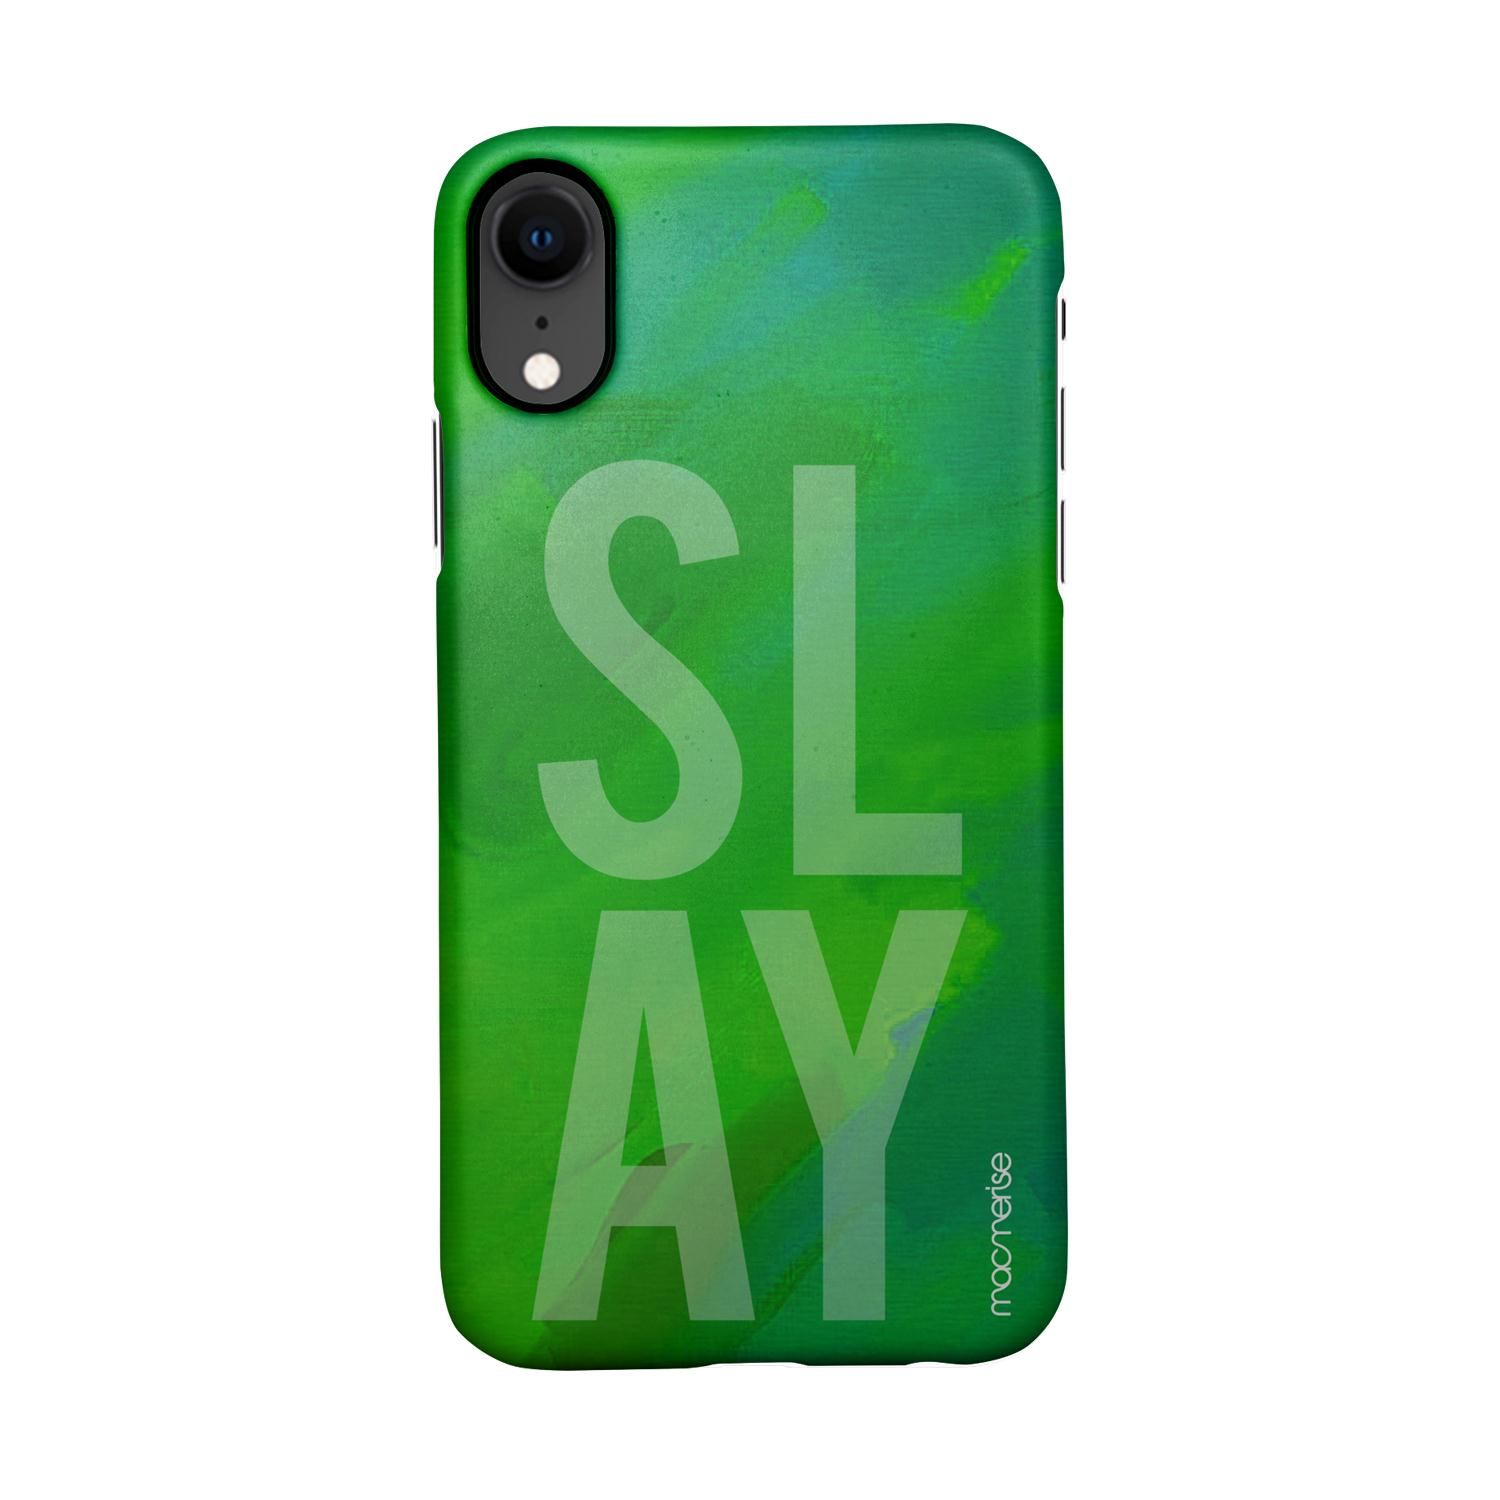 Buy Slay Green - Sleek Phone Case for iPhone XR Online